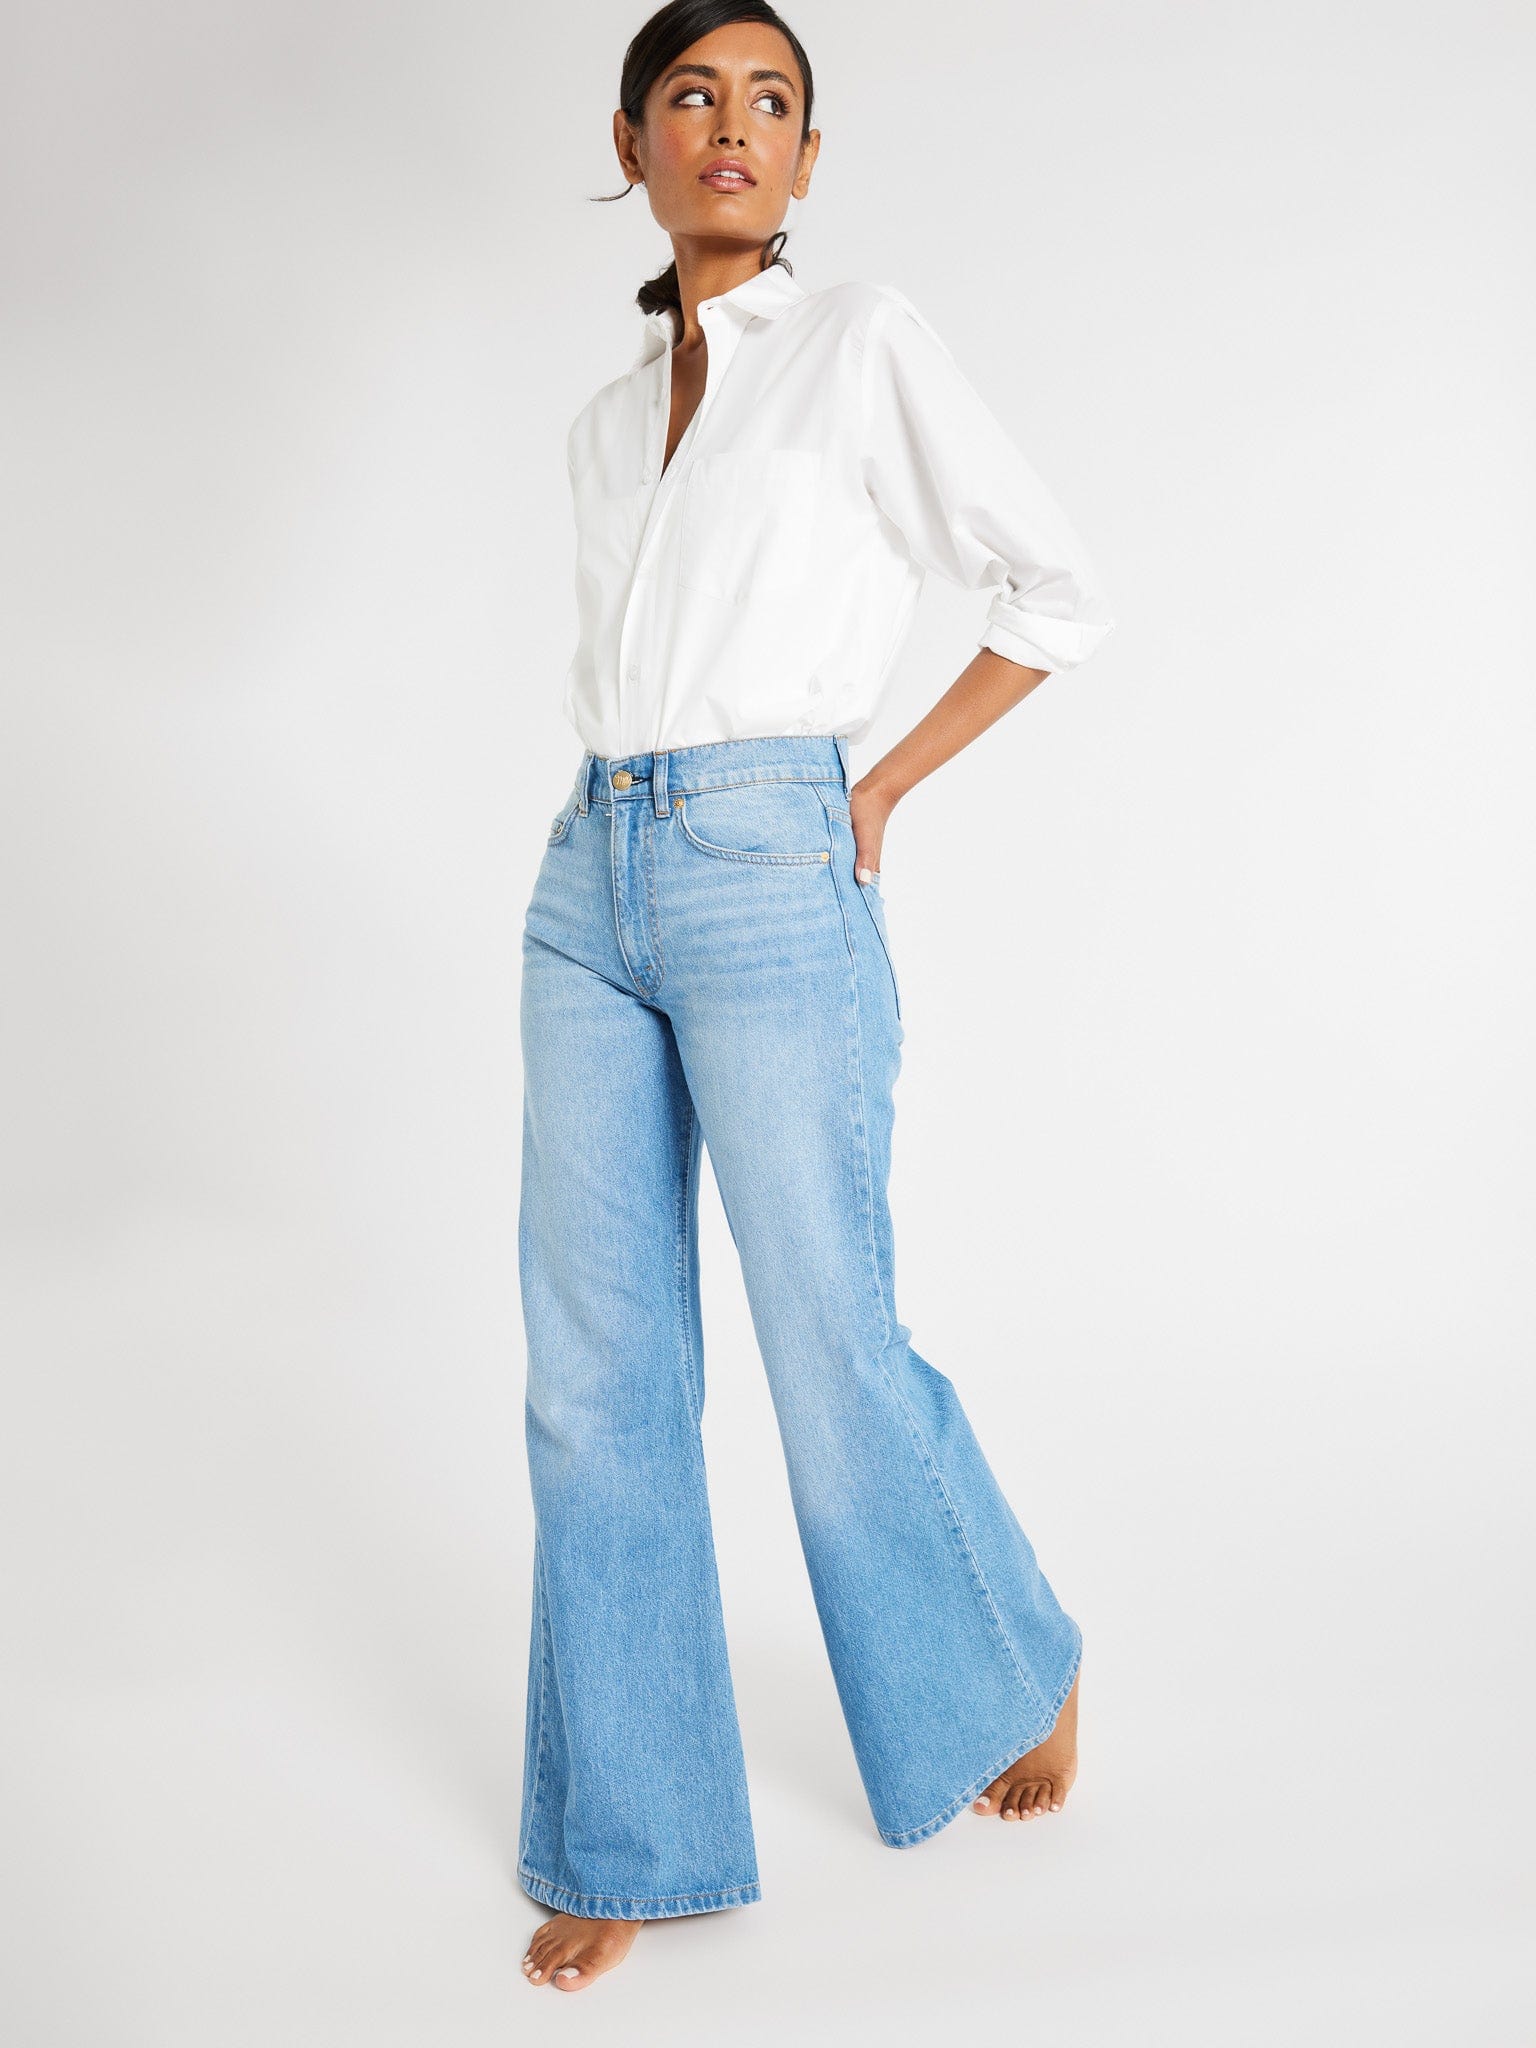 MILLE Clothing Ashton High Rise Wide Leg Flare Jean in Malibu